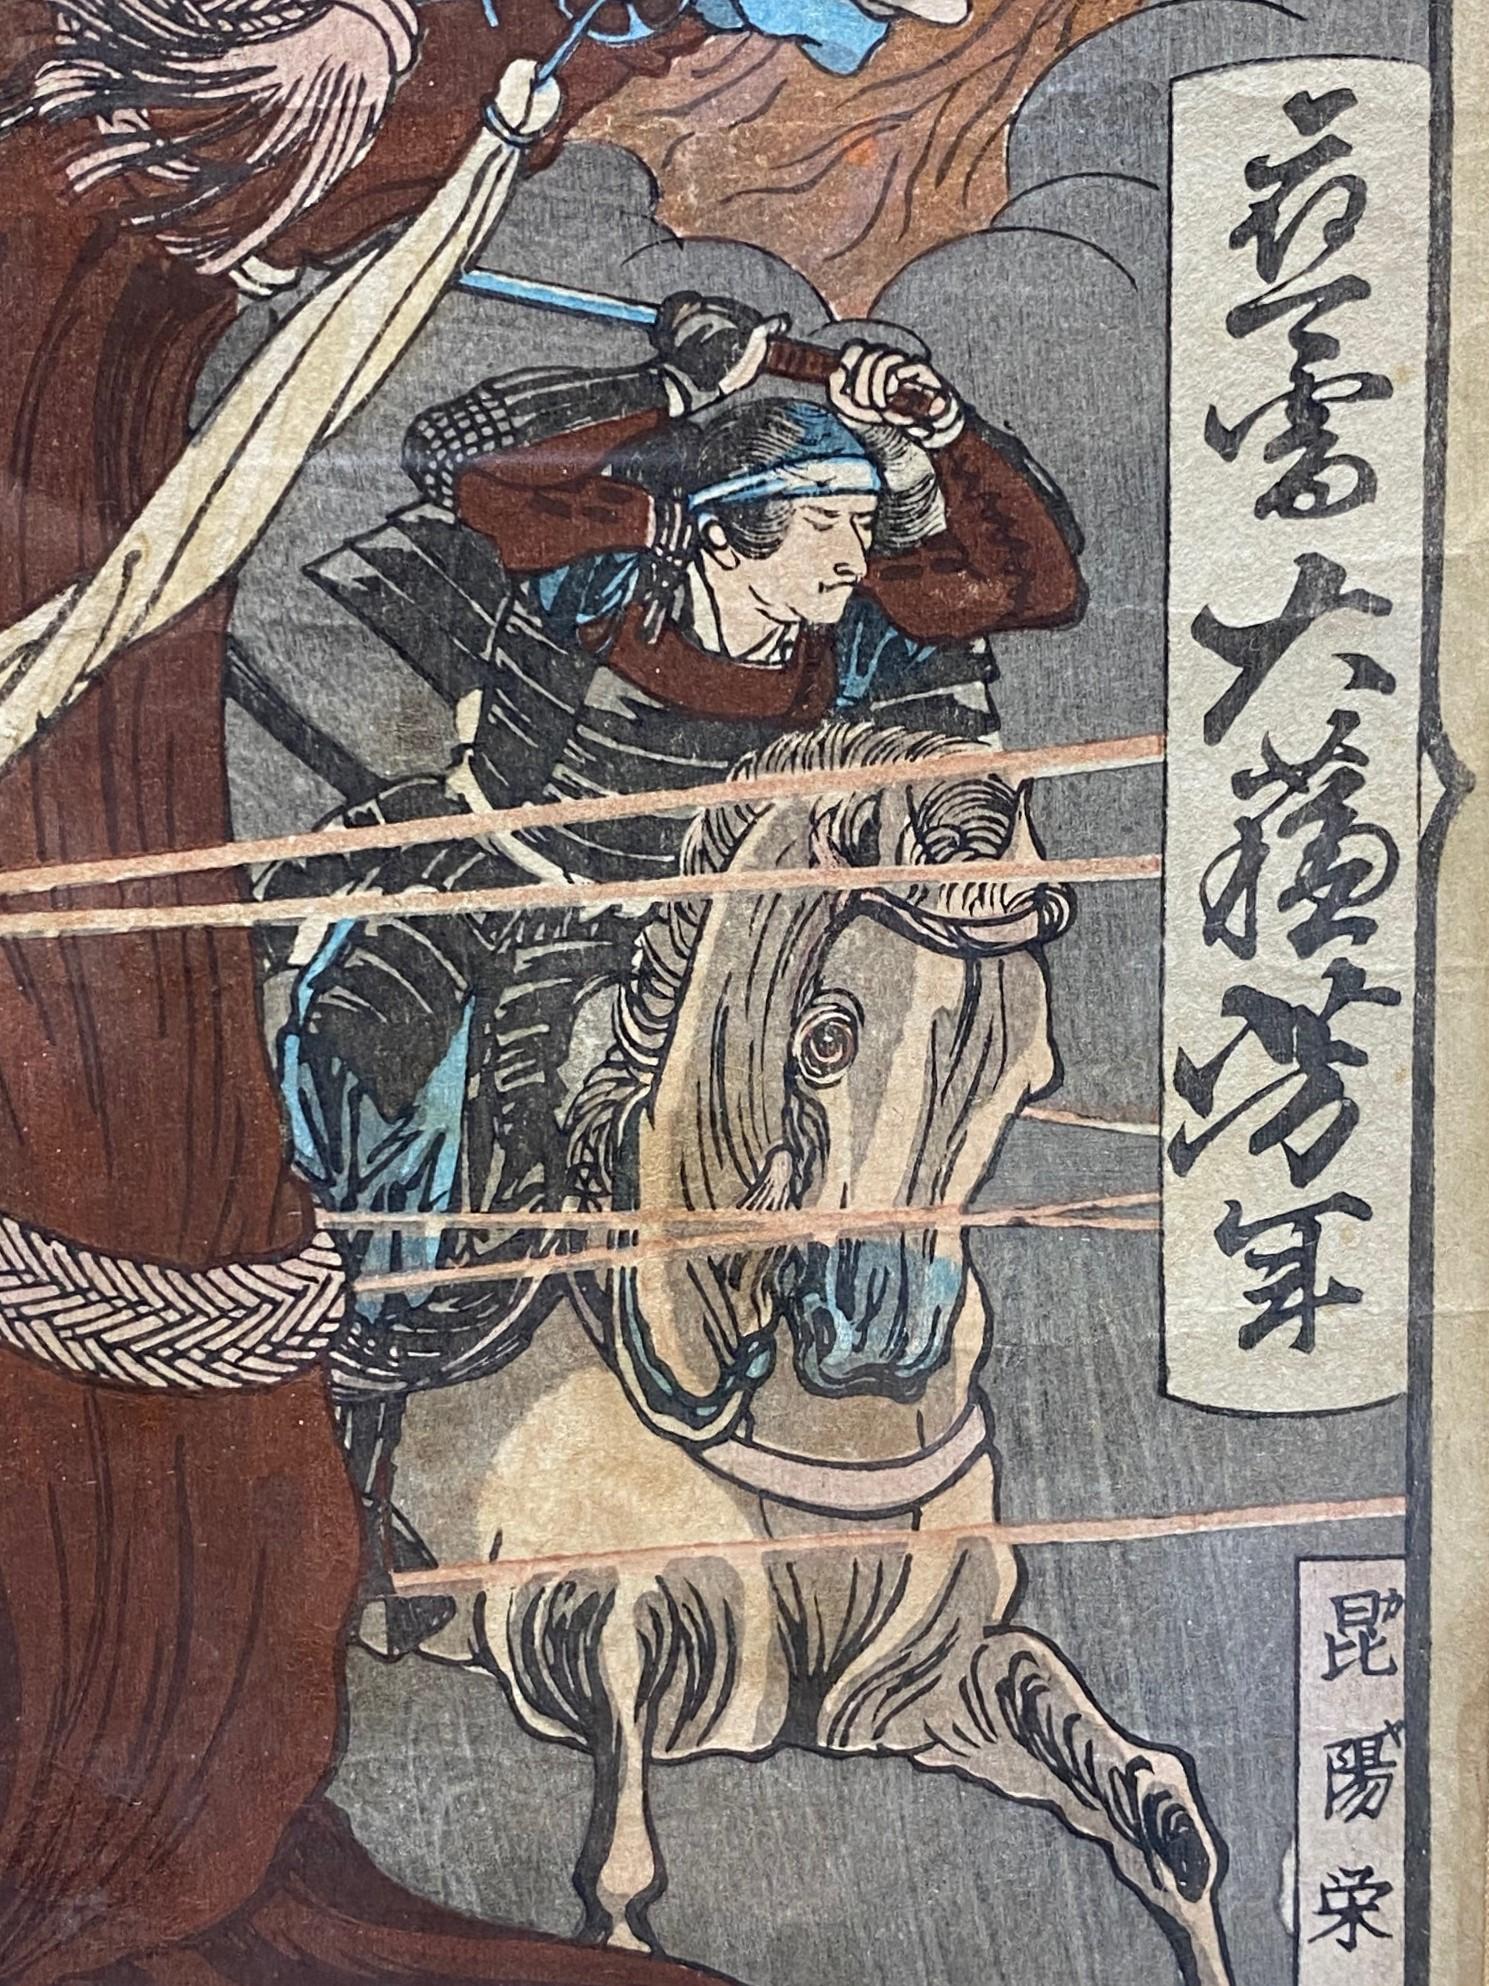 Yoshitoshi Tsukioka Signed Japanese Woodblock Print Samurai Warrors on Horseback For Sale 4